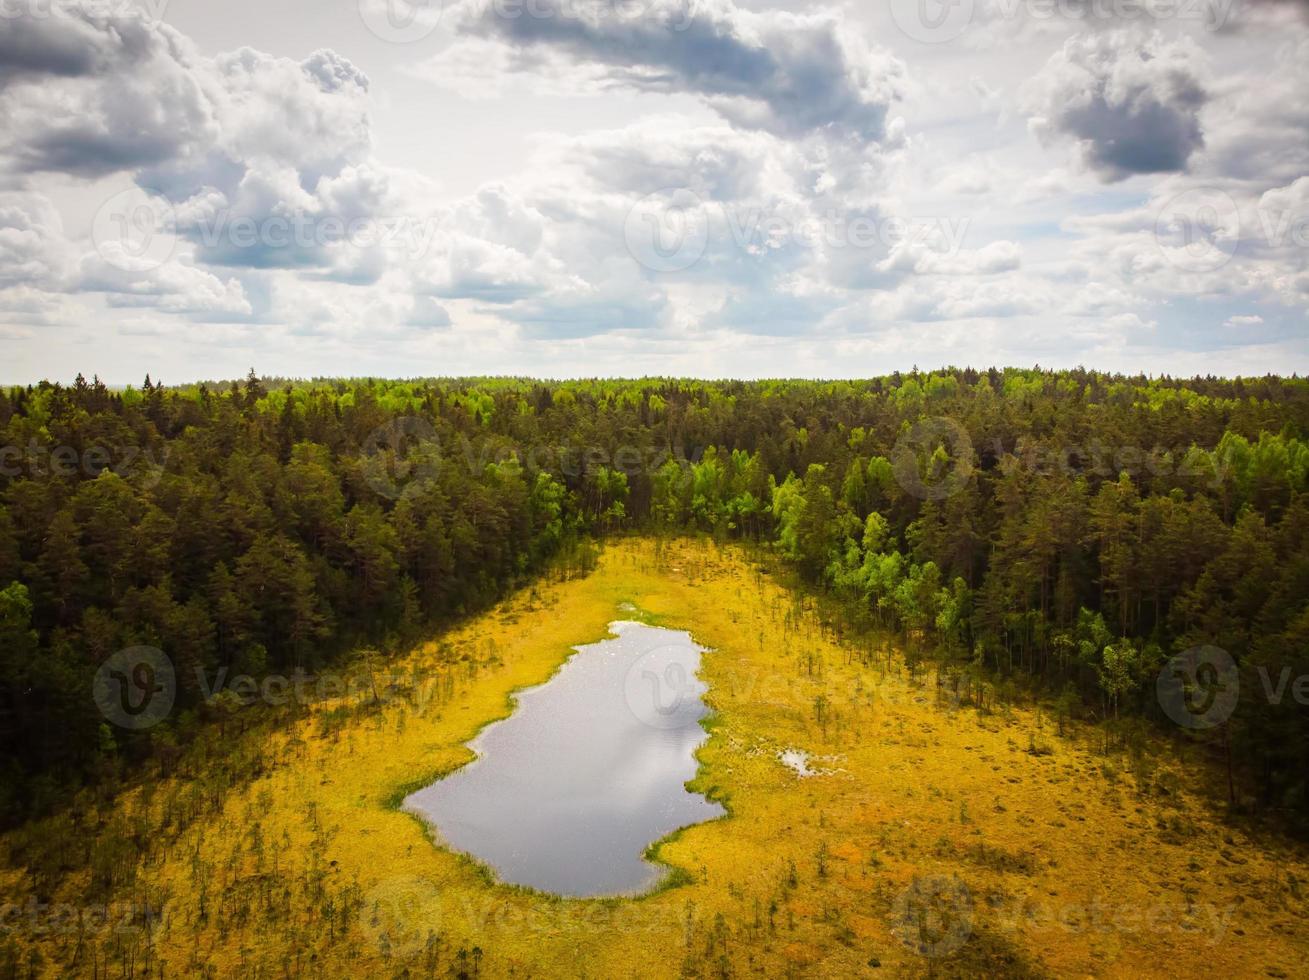 verticale luchtfoto niauka-meer in het regionale park van kurtuvenai, litouwen platteland, natuur en flora foto